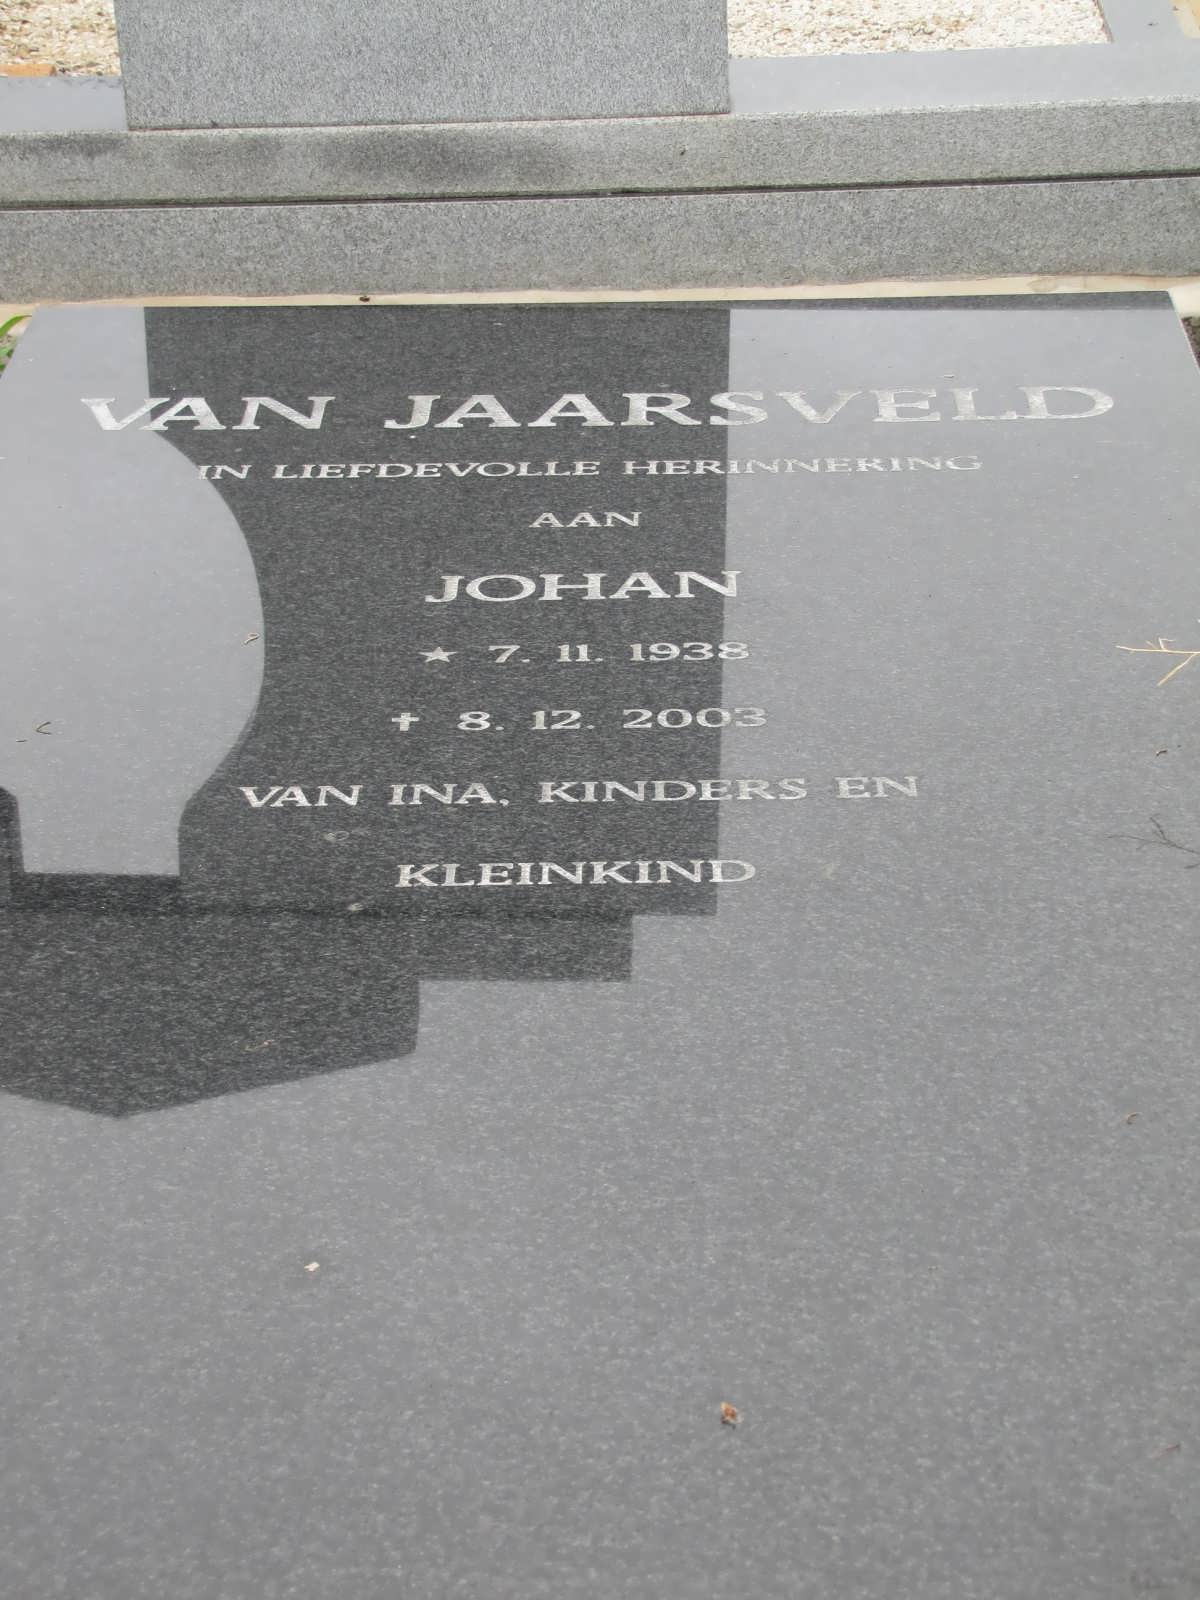 JAARSVELD Johannes B., van 1938-2003